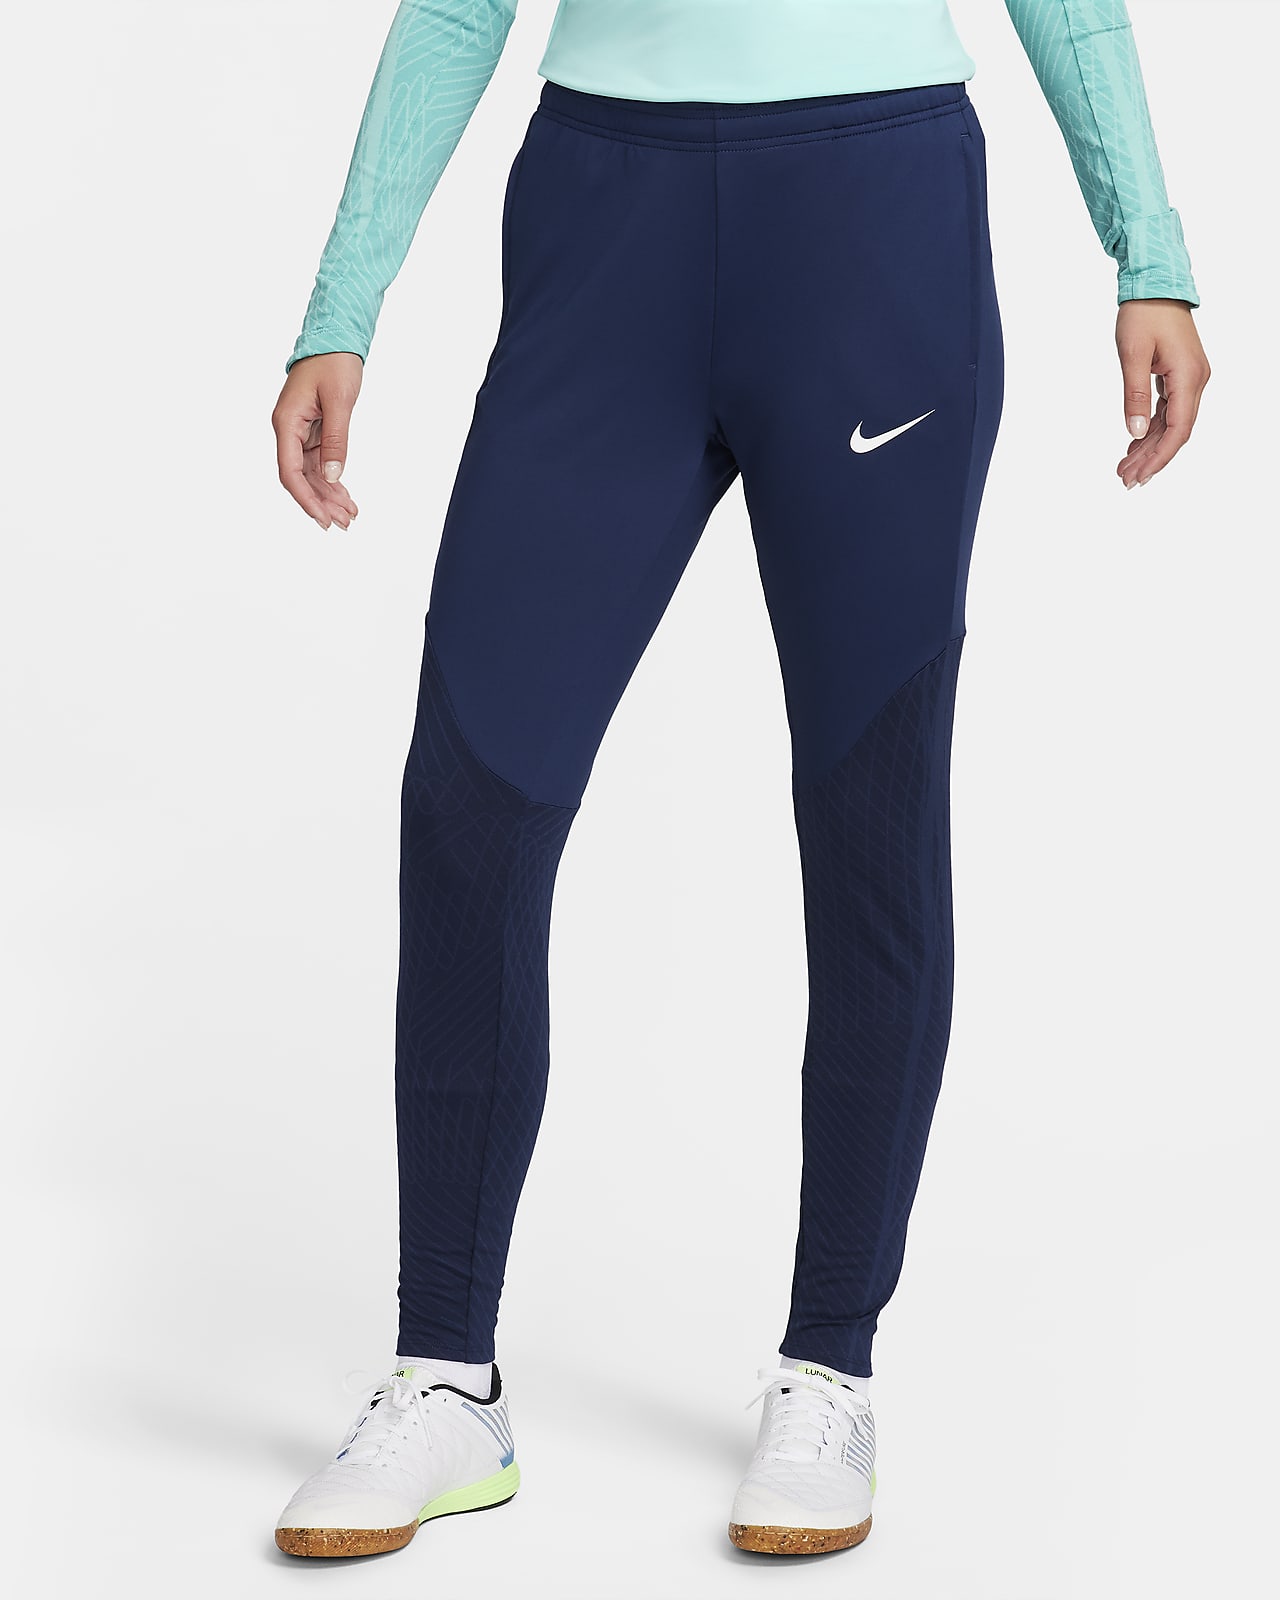 England Standard Issue Women's Nike Dri-FIT Trousers